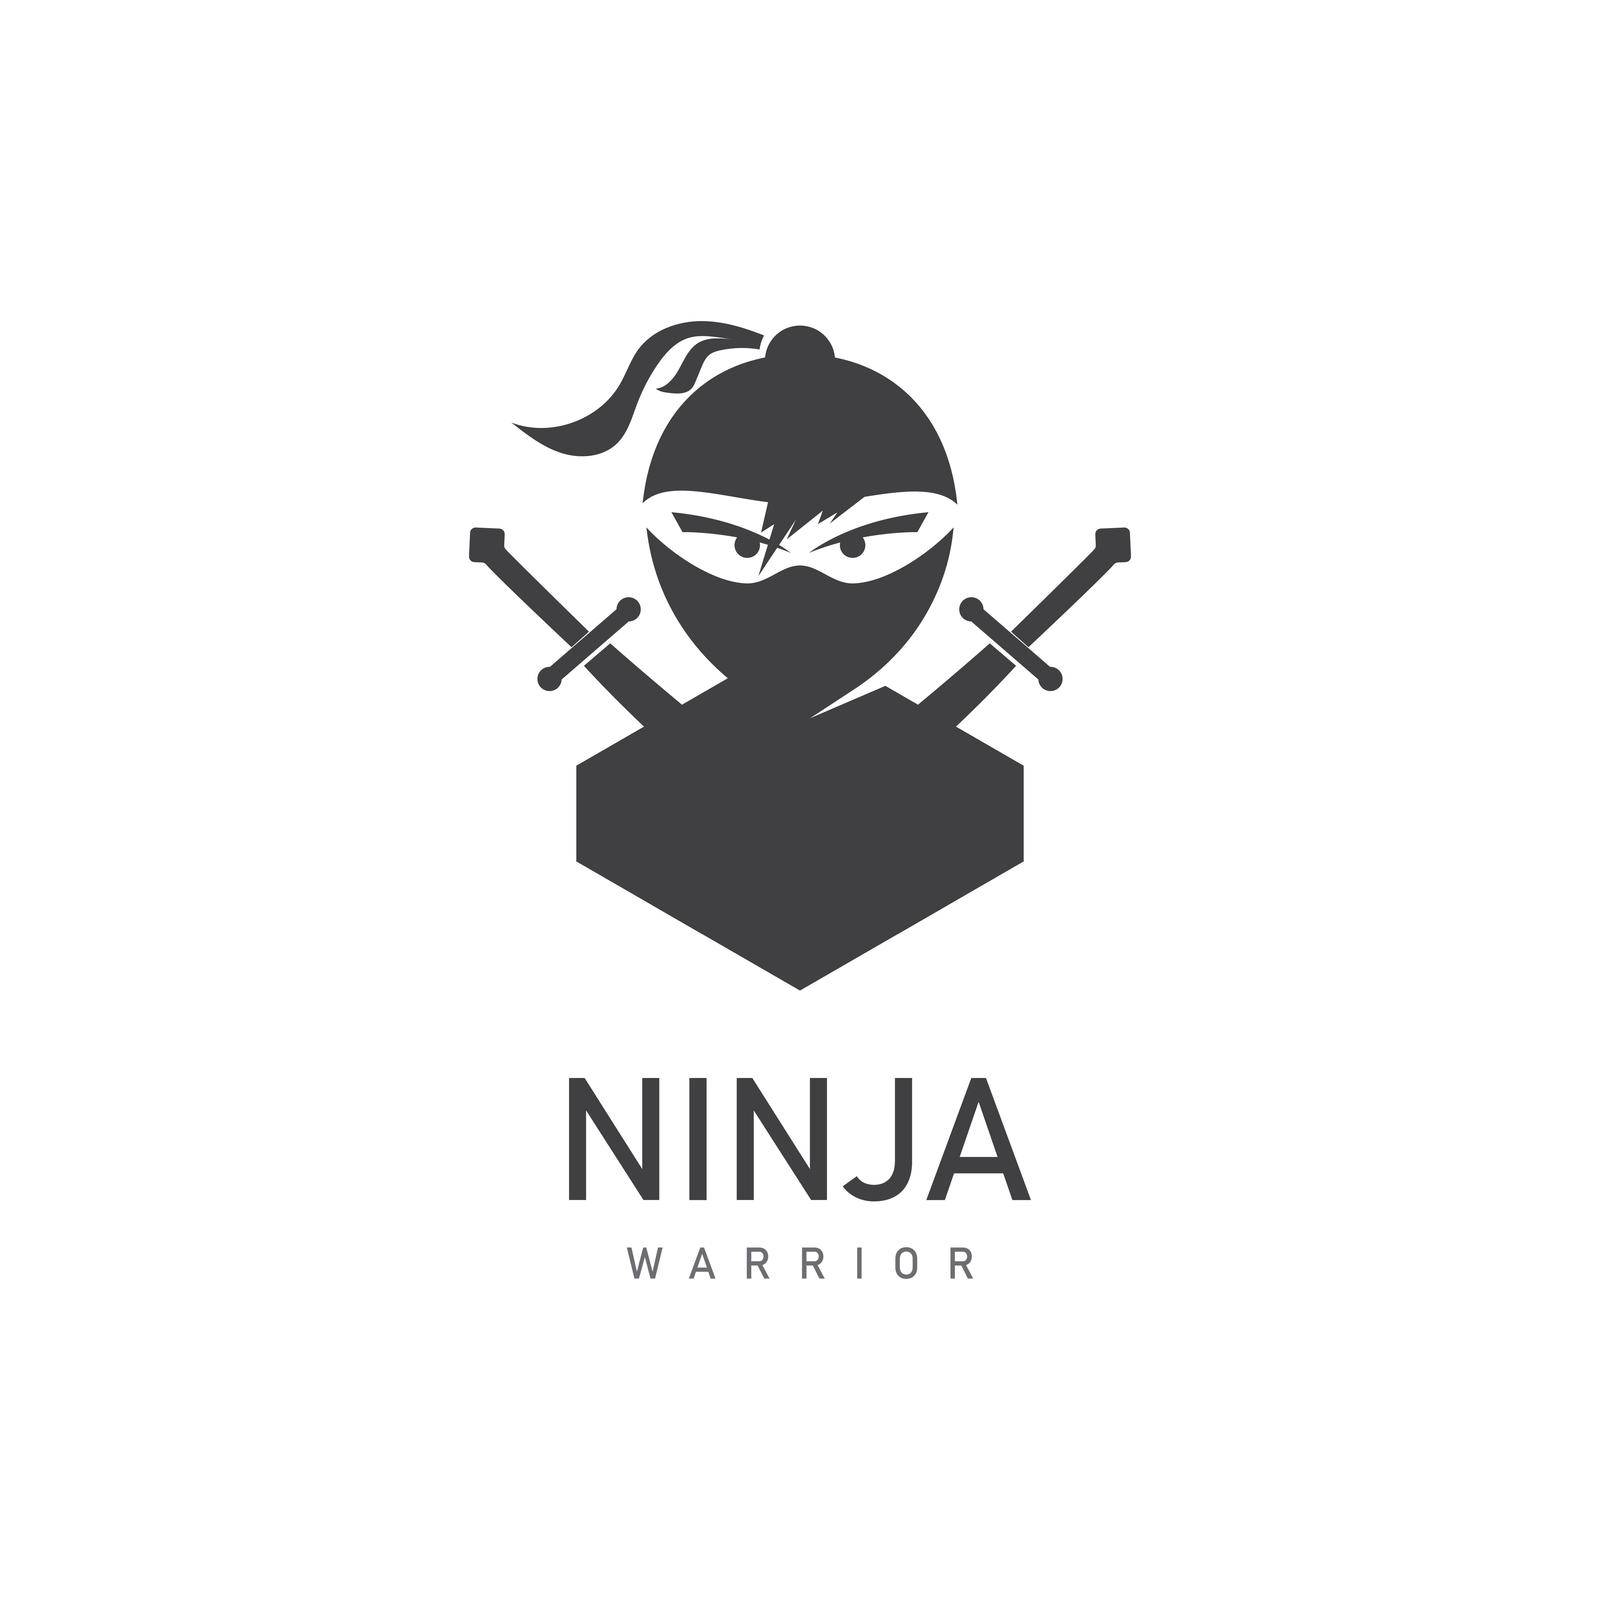 Ninja illustration logo vector template